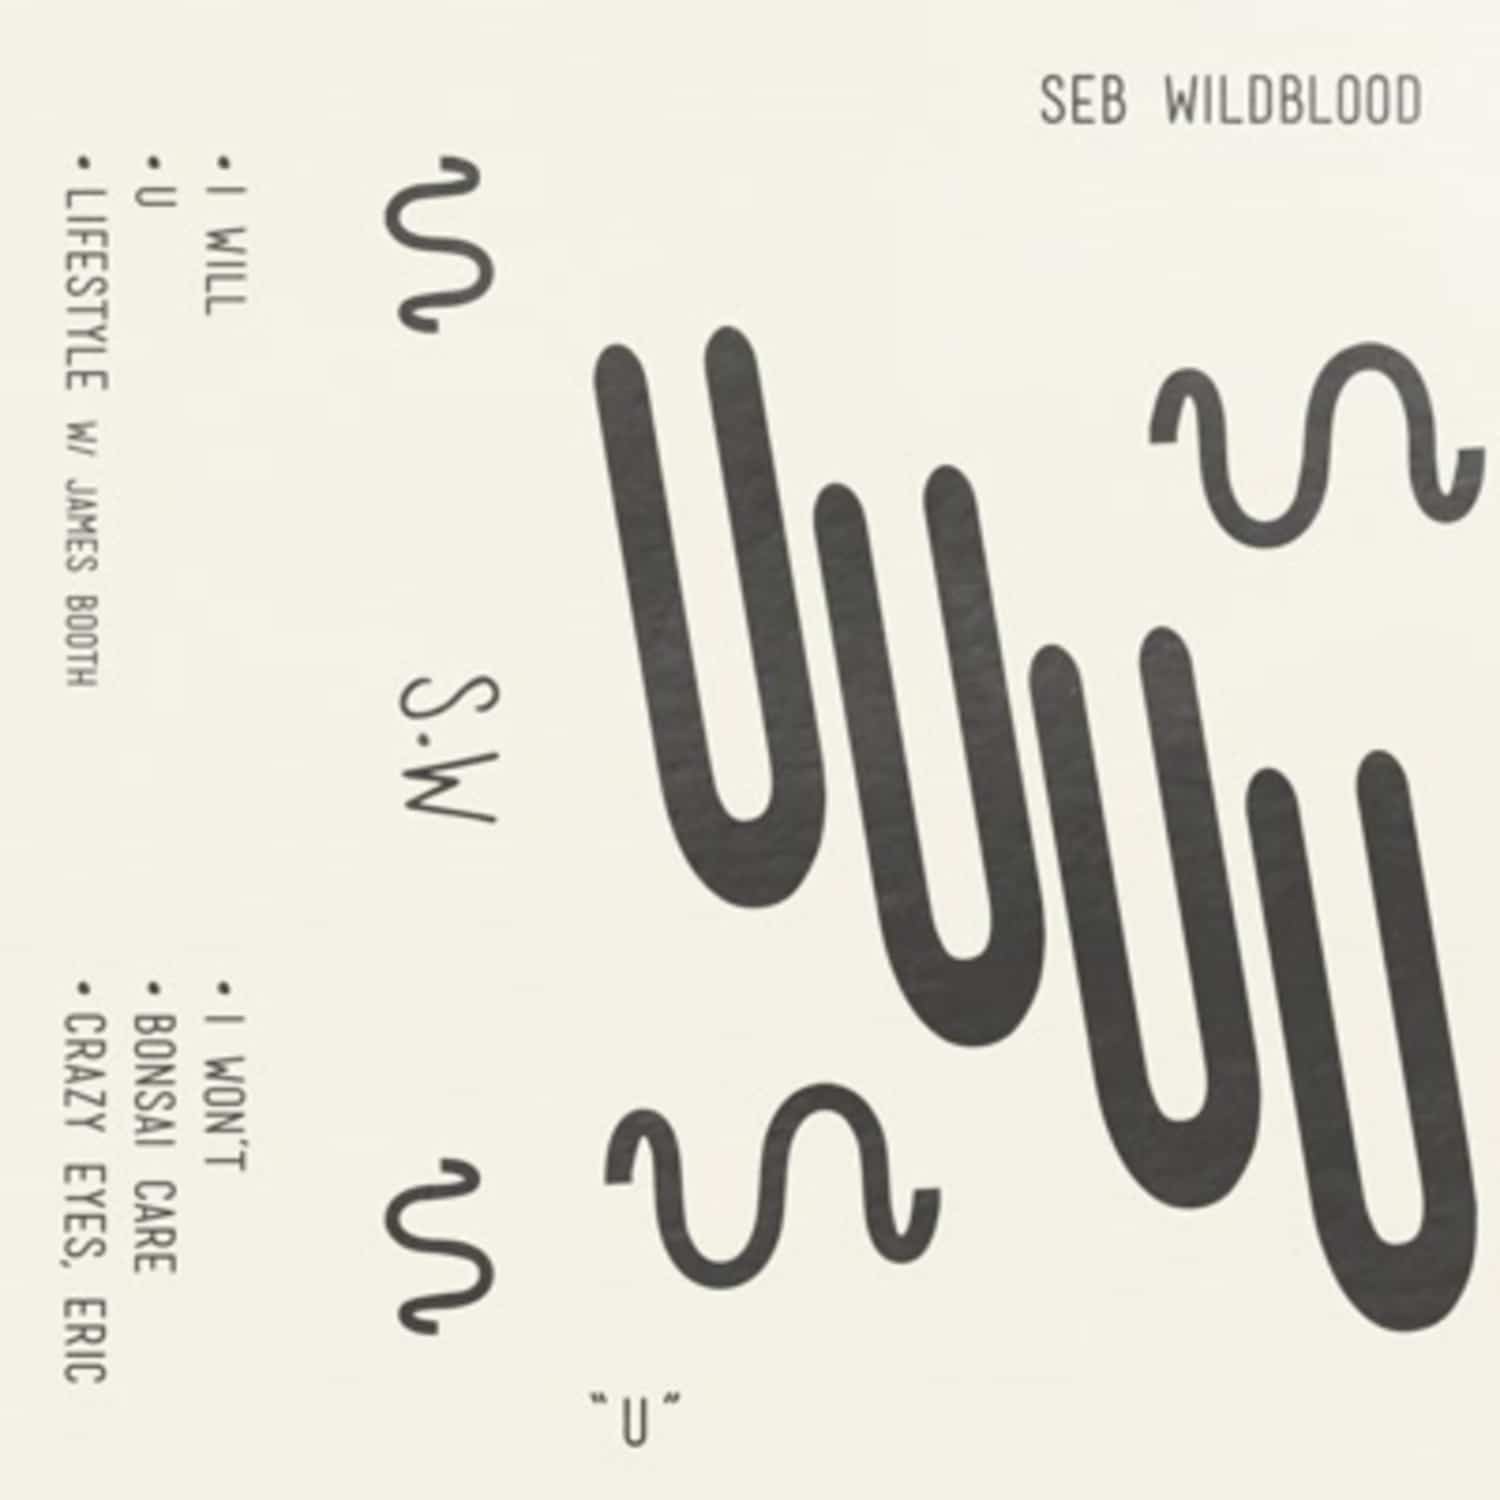 Seb Wildblood - U 